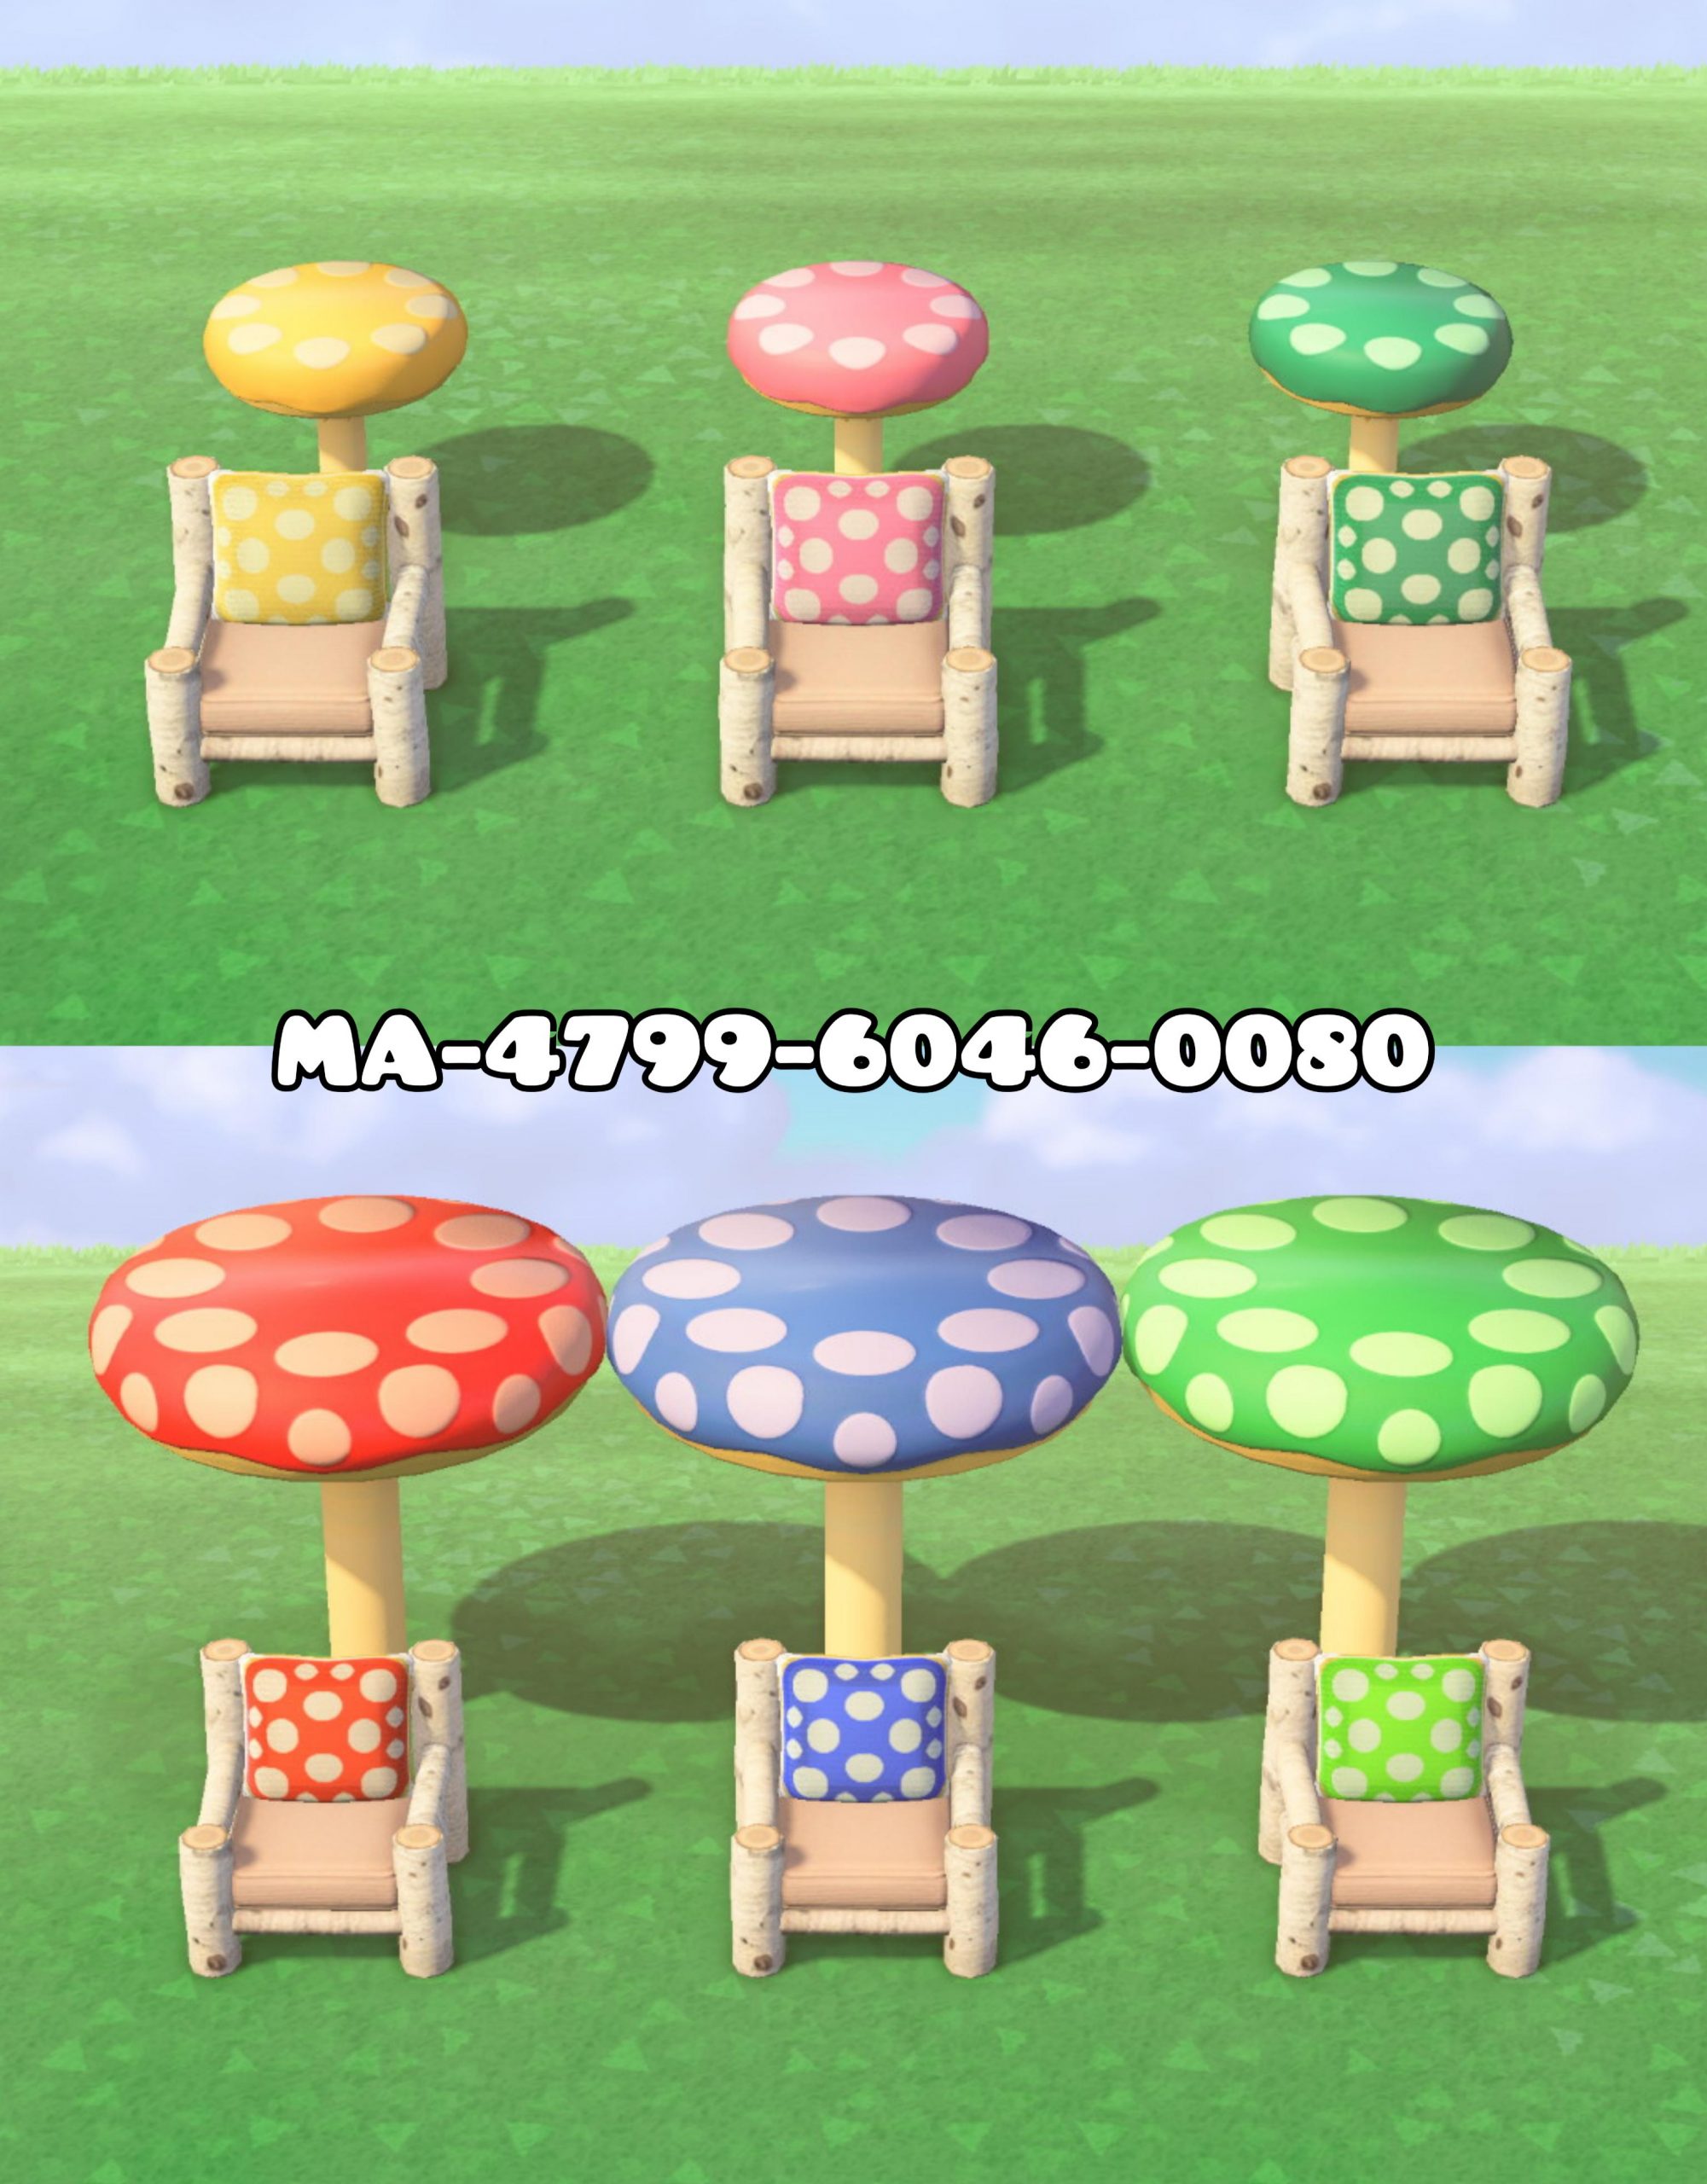 I made a pattern to match the Mario Mushroom Platforms!